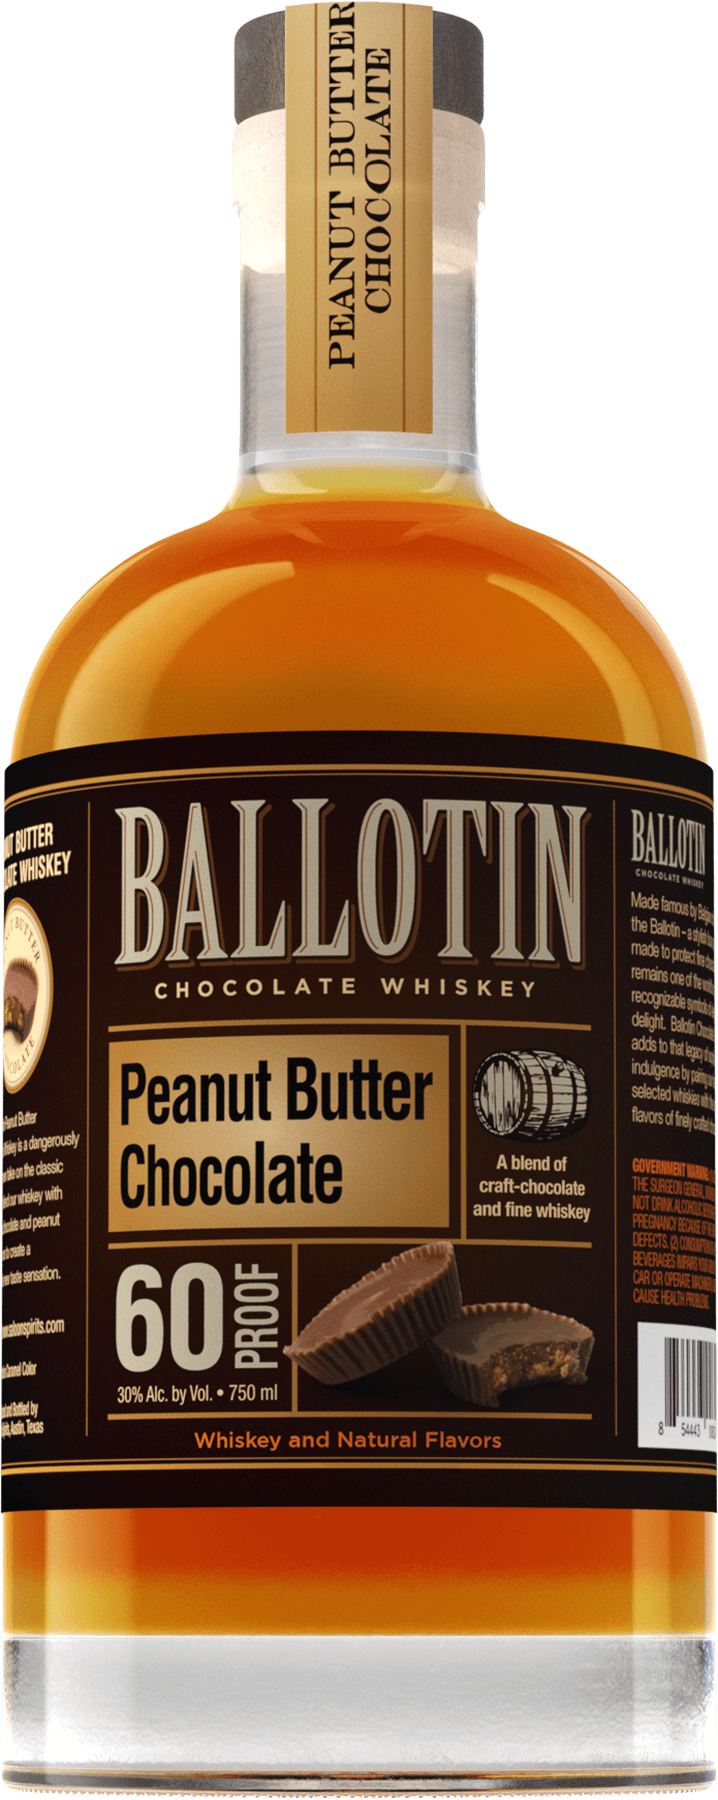 Ballotin Peanut Butter Chocolate Whiskey - Barbank